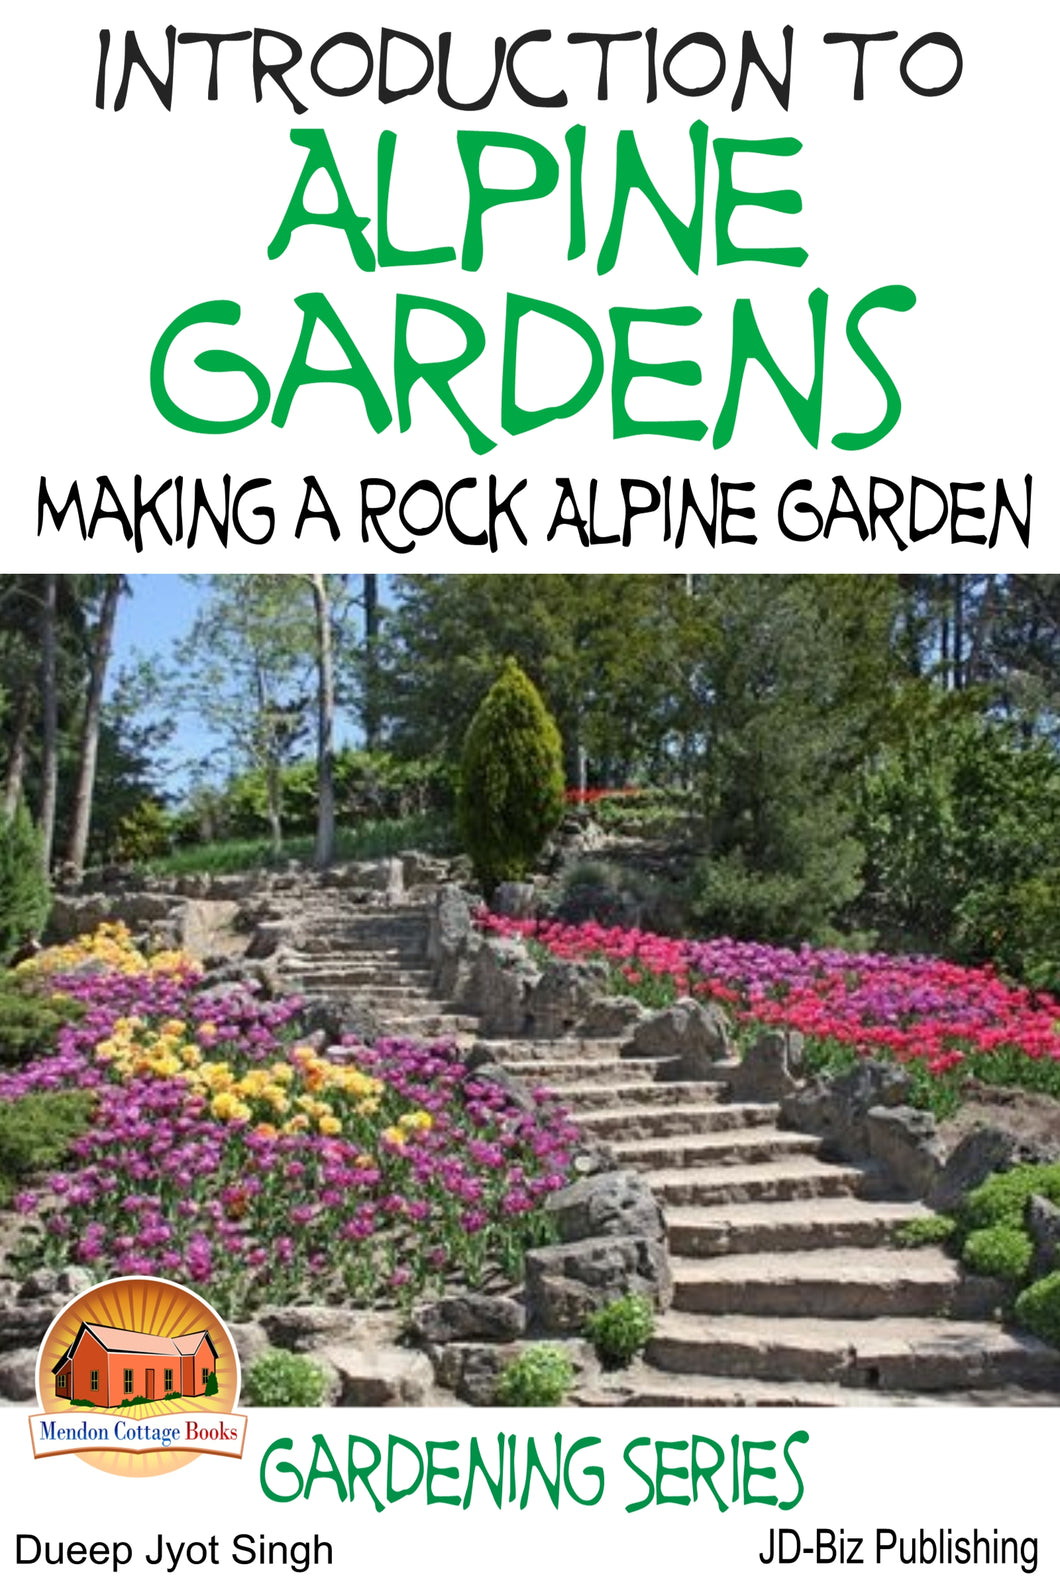 Introduction to Alpine Gardens